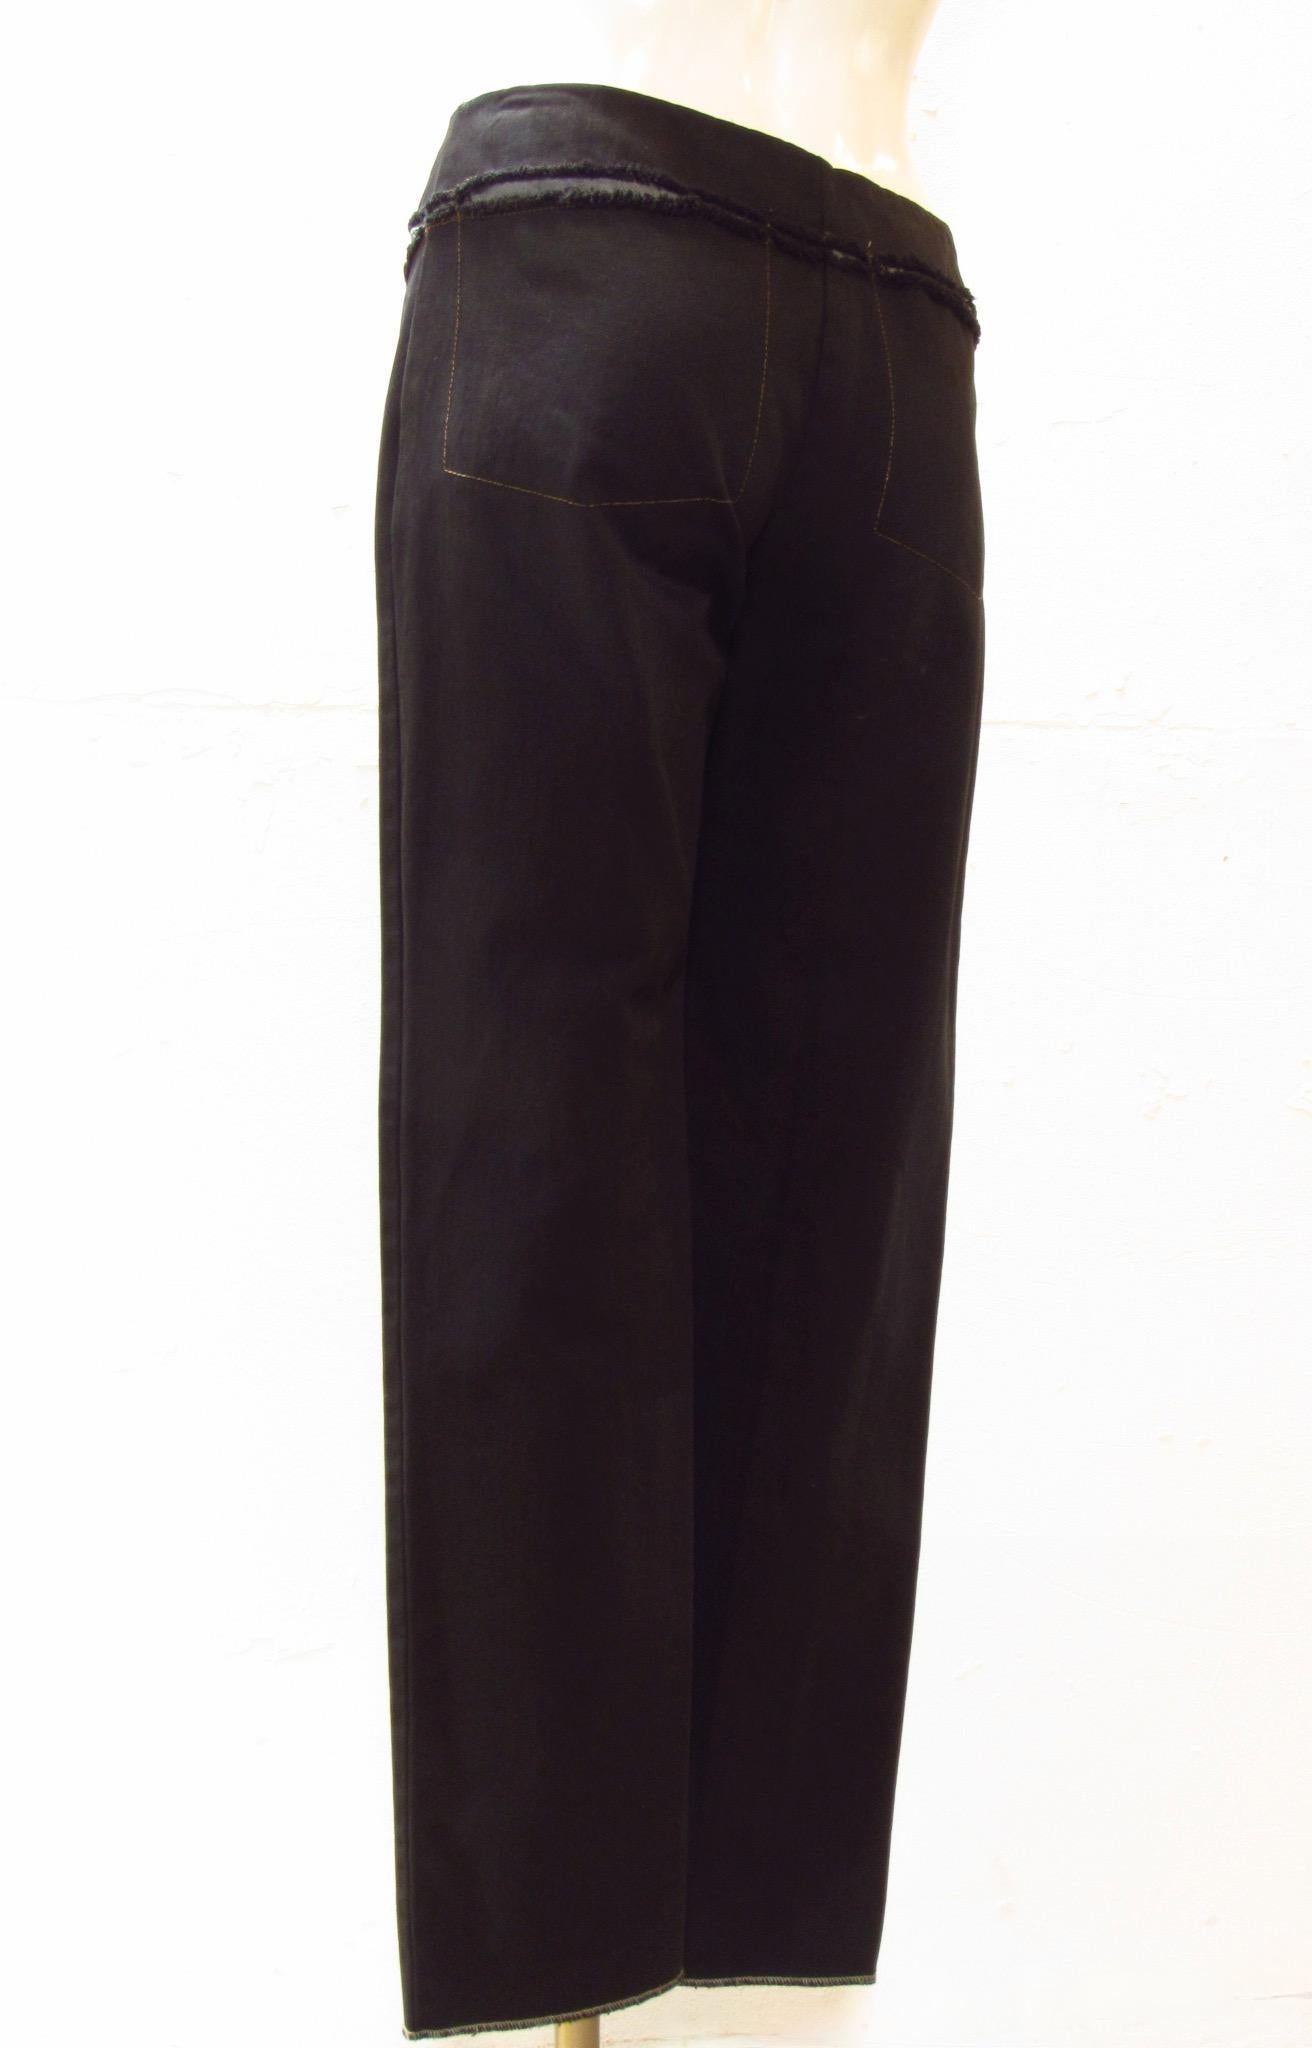 Maison Martin Margiela Narrow Leg Black Pant In New Condition For Sale In Laguna Beach, CA